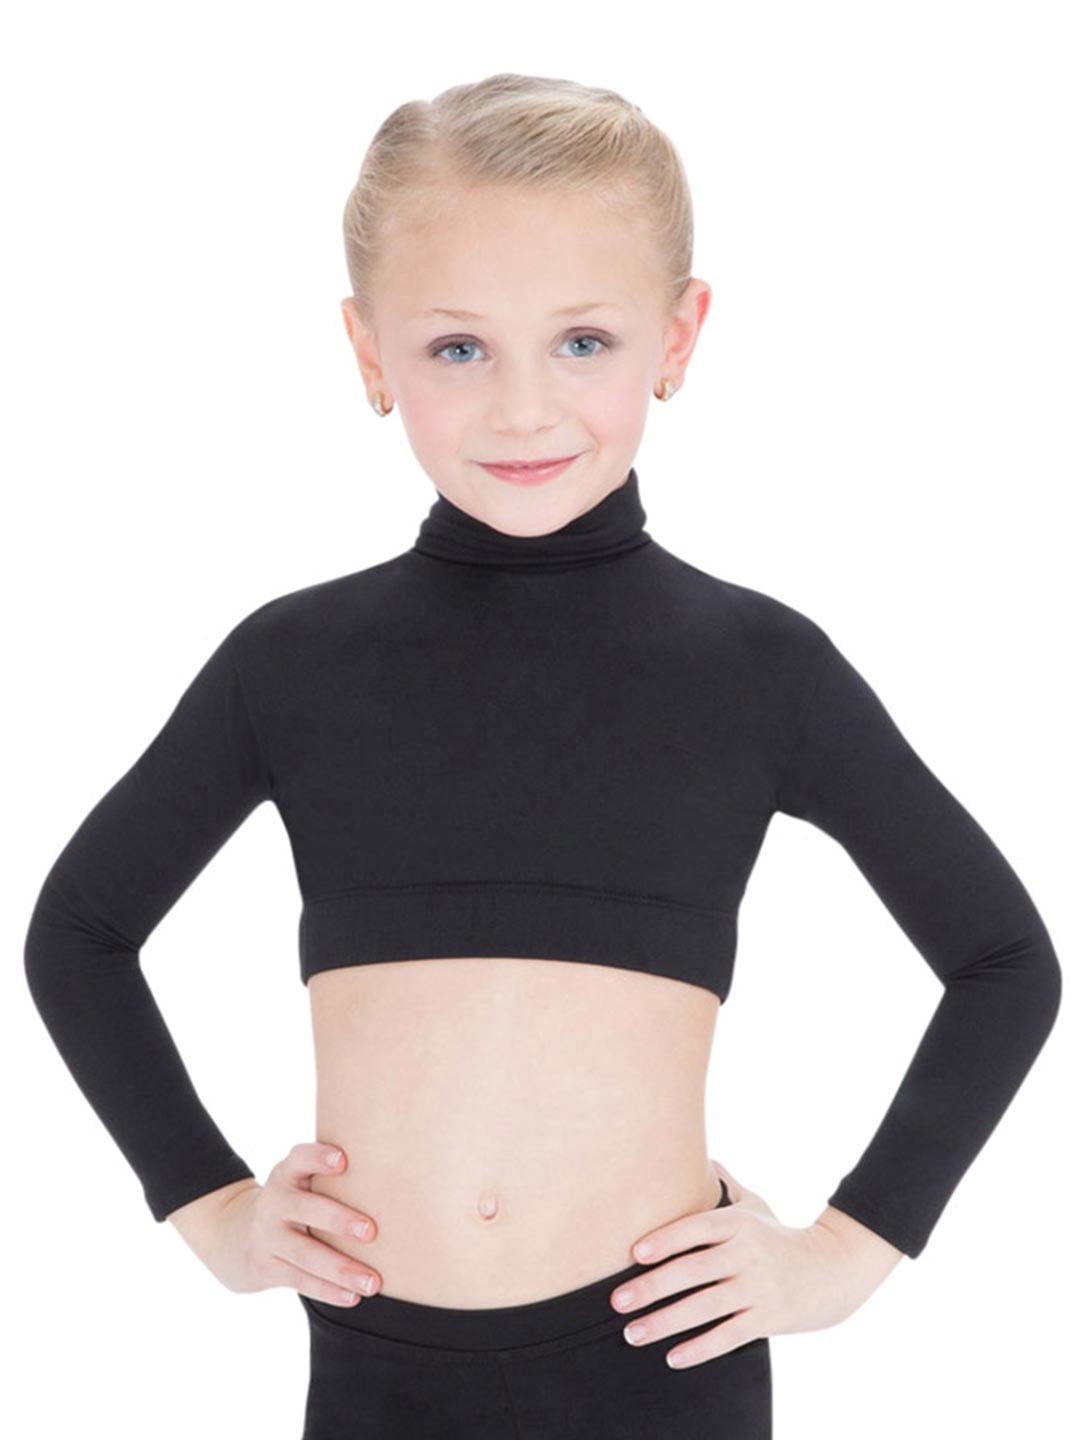 CHICTRY Girls Children Plain Turtleneck Long Sleeve Dance Sports Crop Top Shirt 